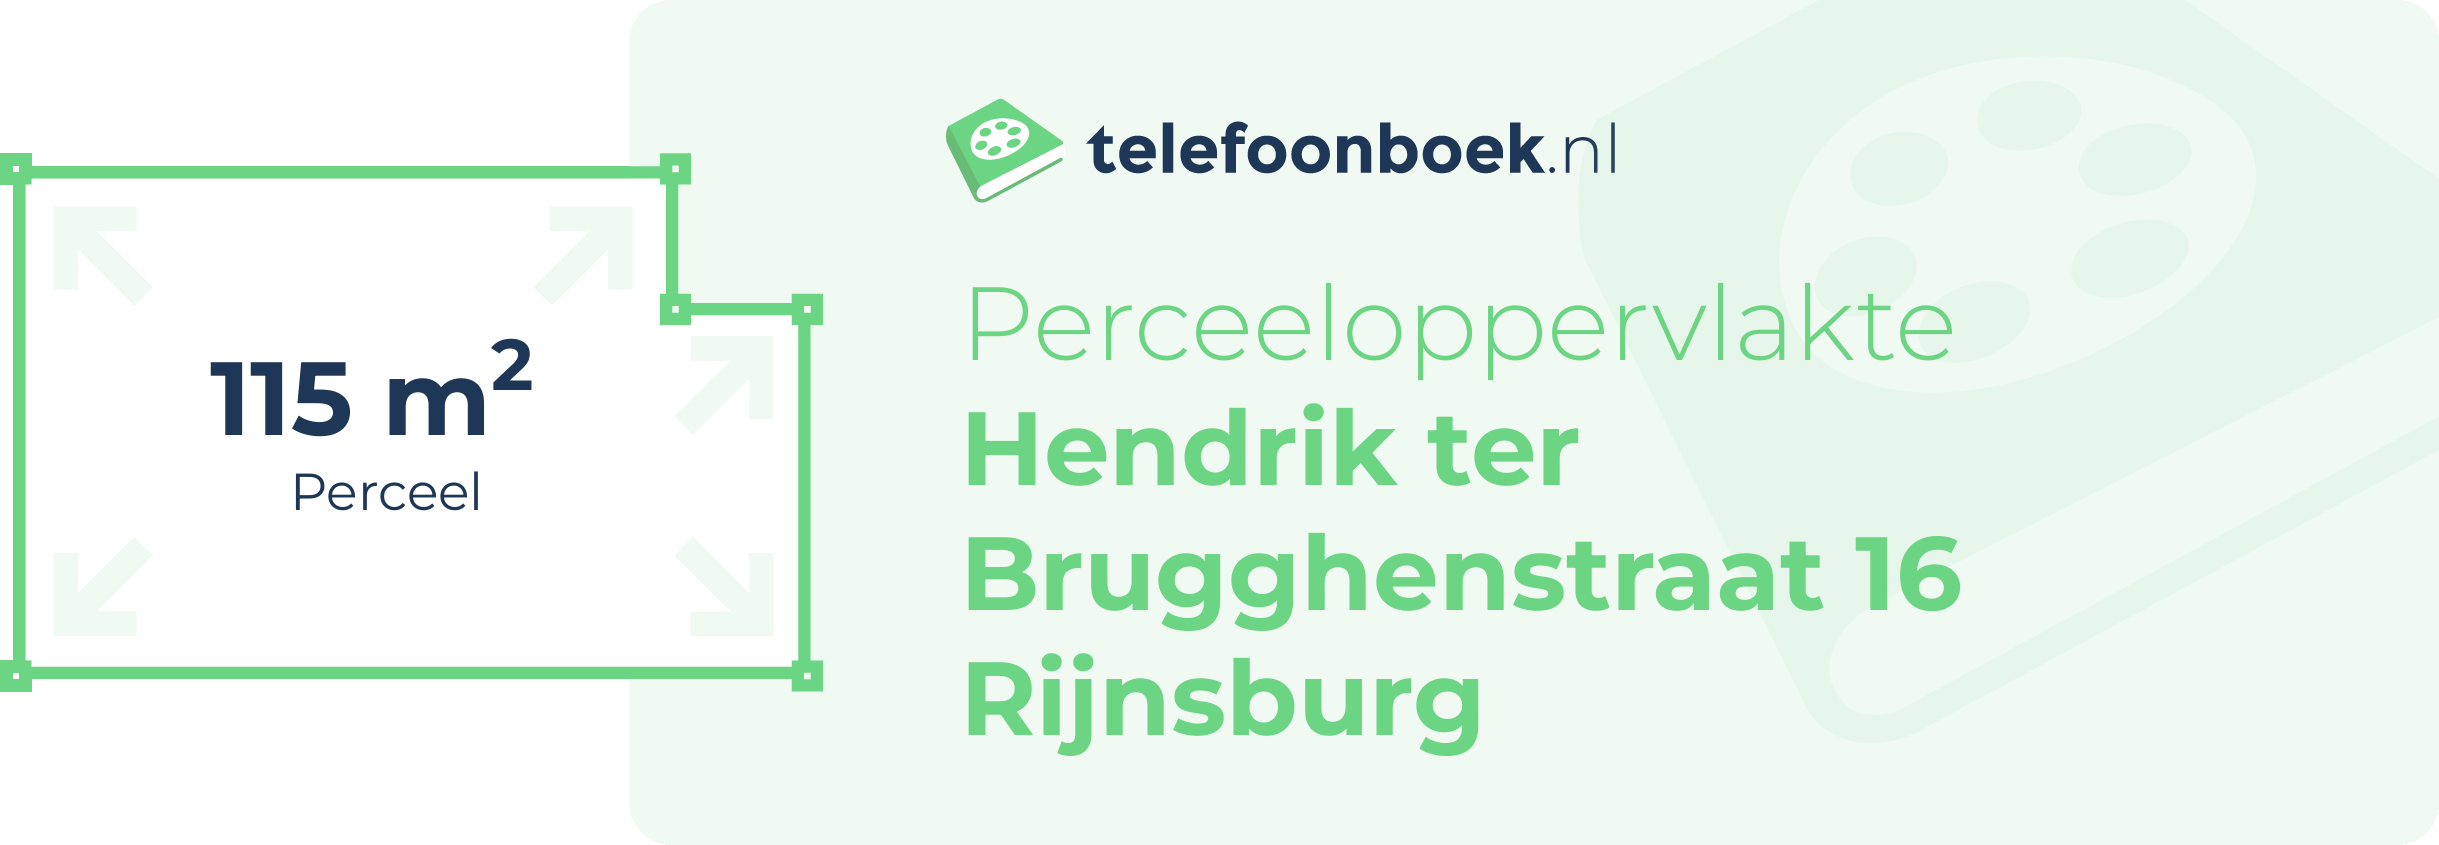 Perceeloppervlakte Hendrik Ter Brugghenstraat 16 Rijnsburg